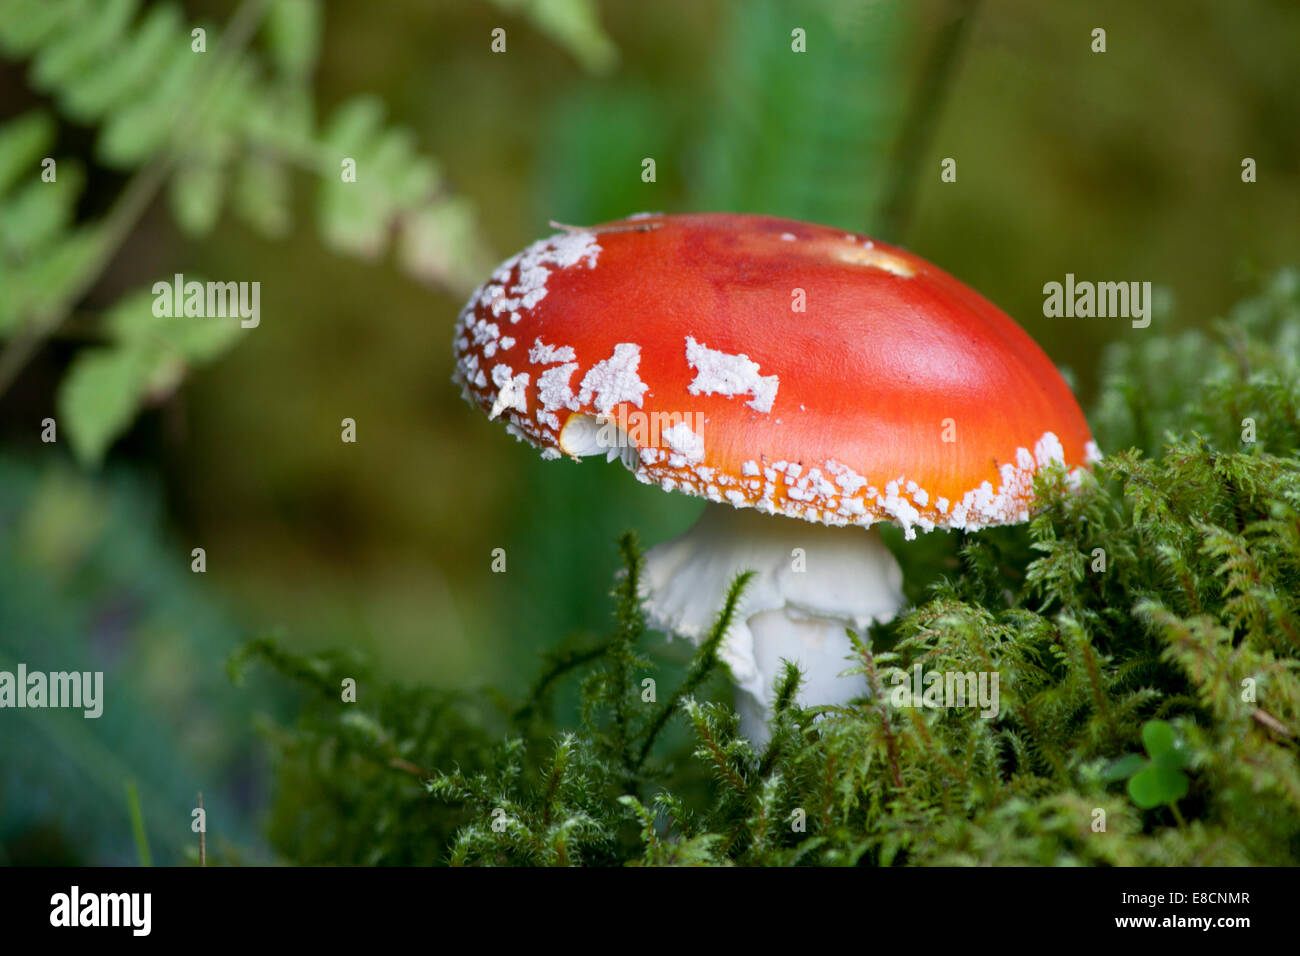 Red cap mushroom Stock Photo